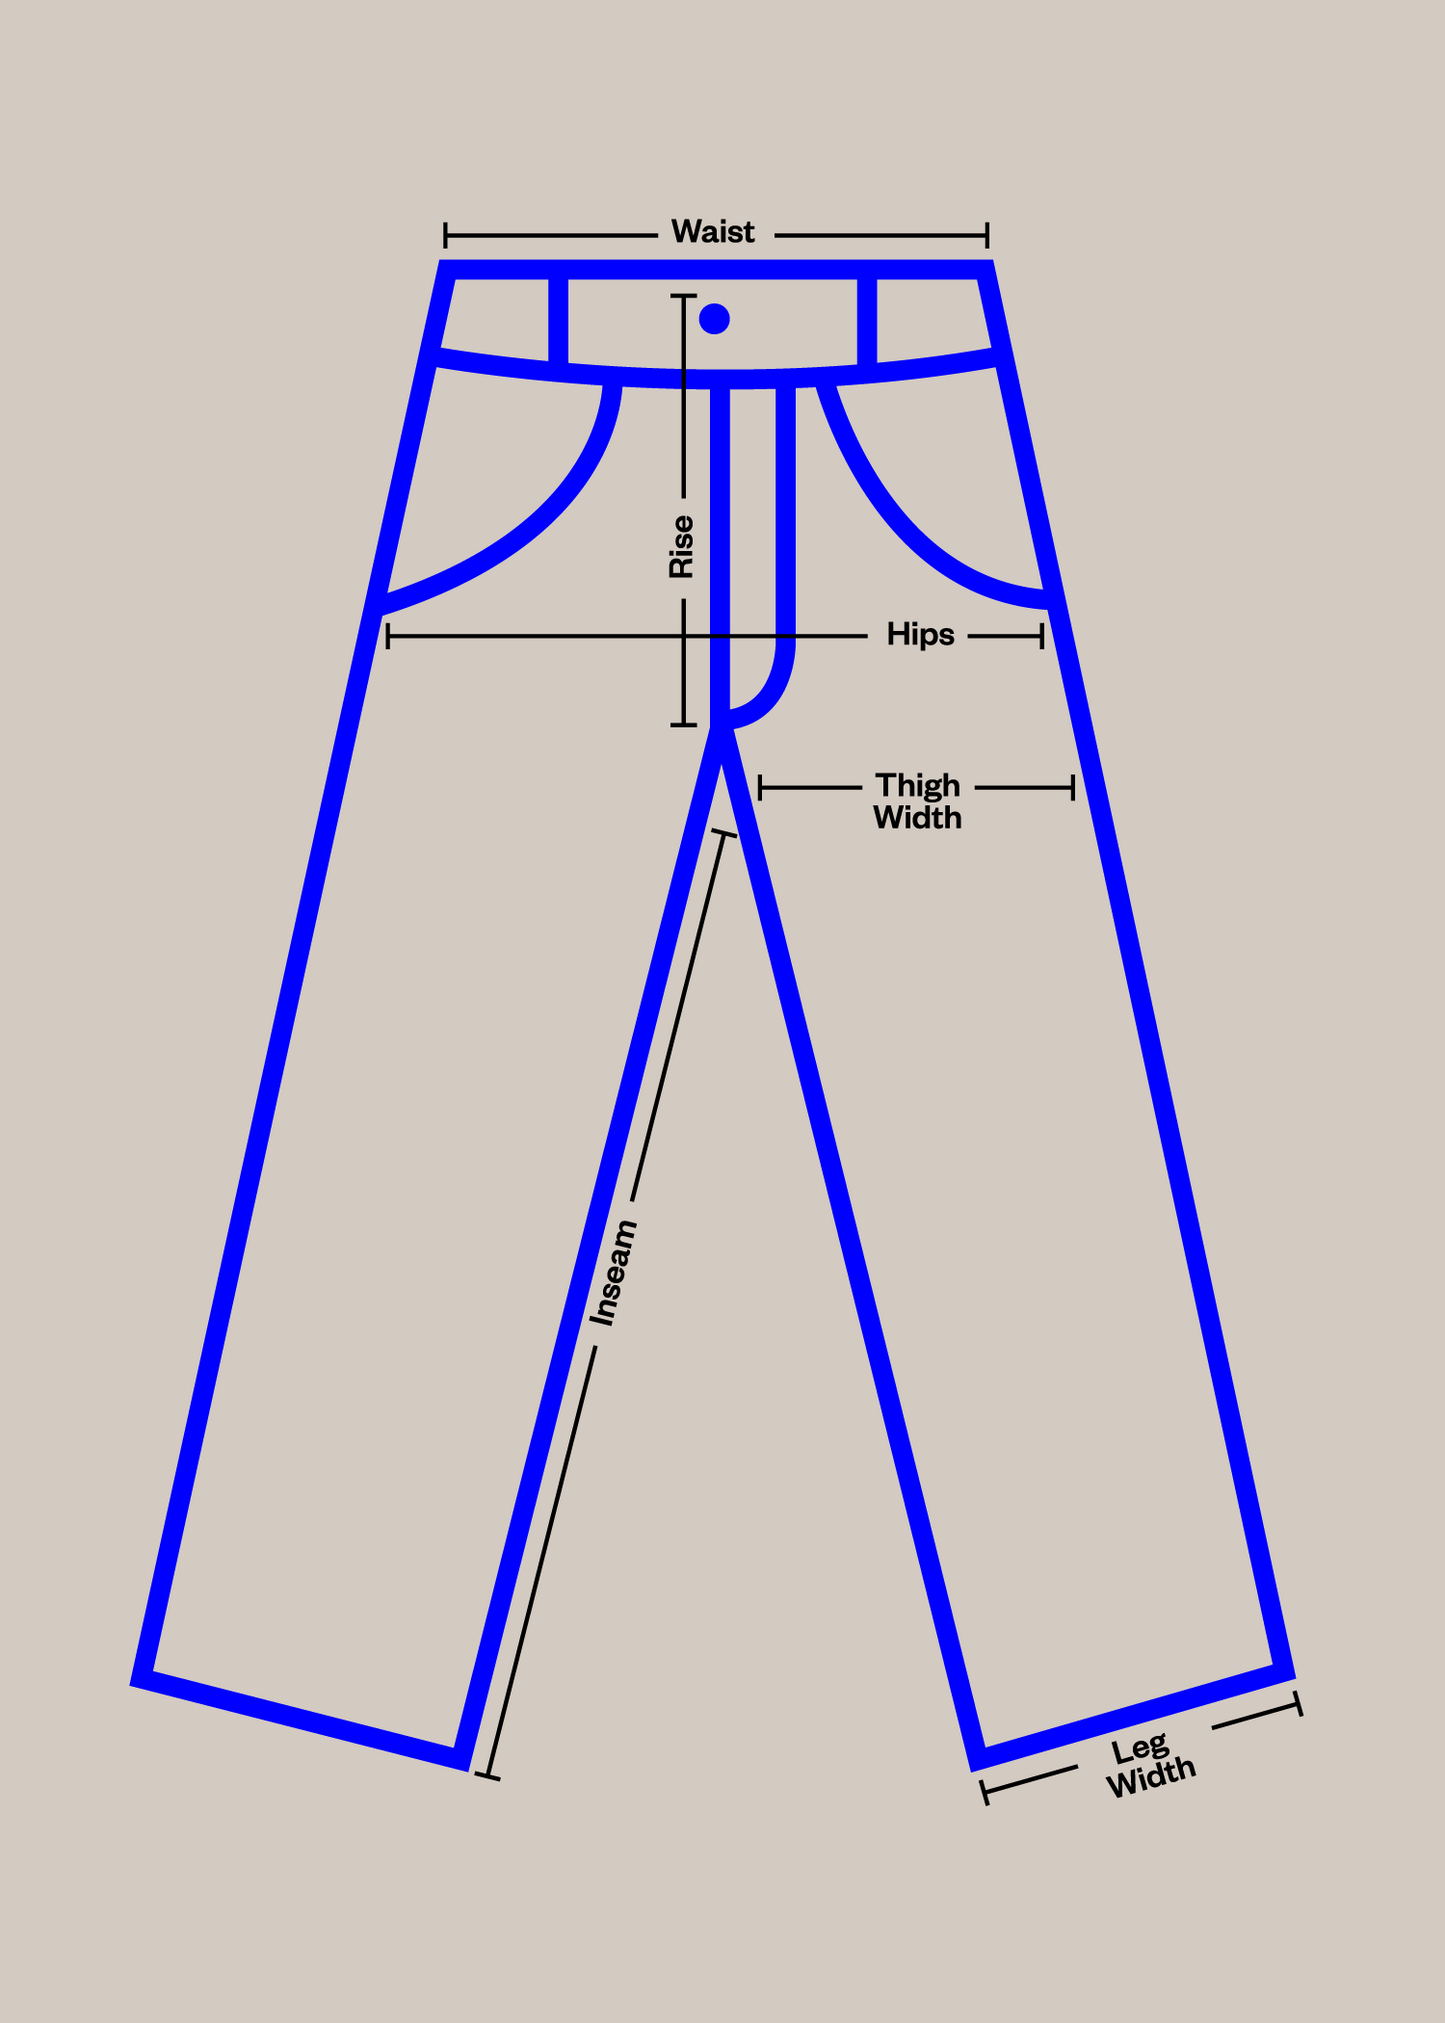 1980s Fench Workwear Chore Pants Size Women's 36 Men's 38 Men's 40